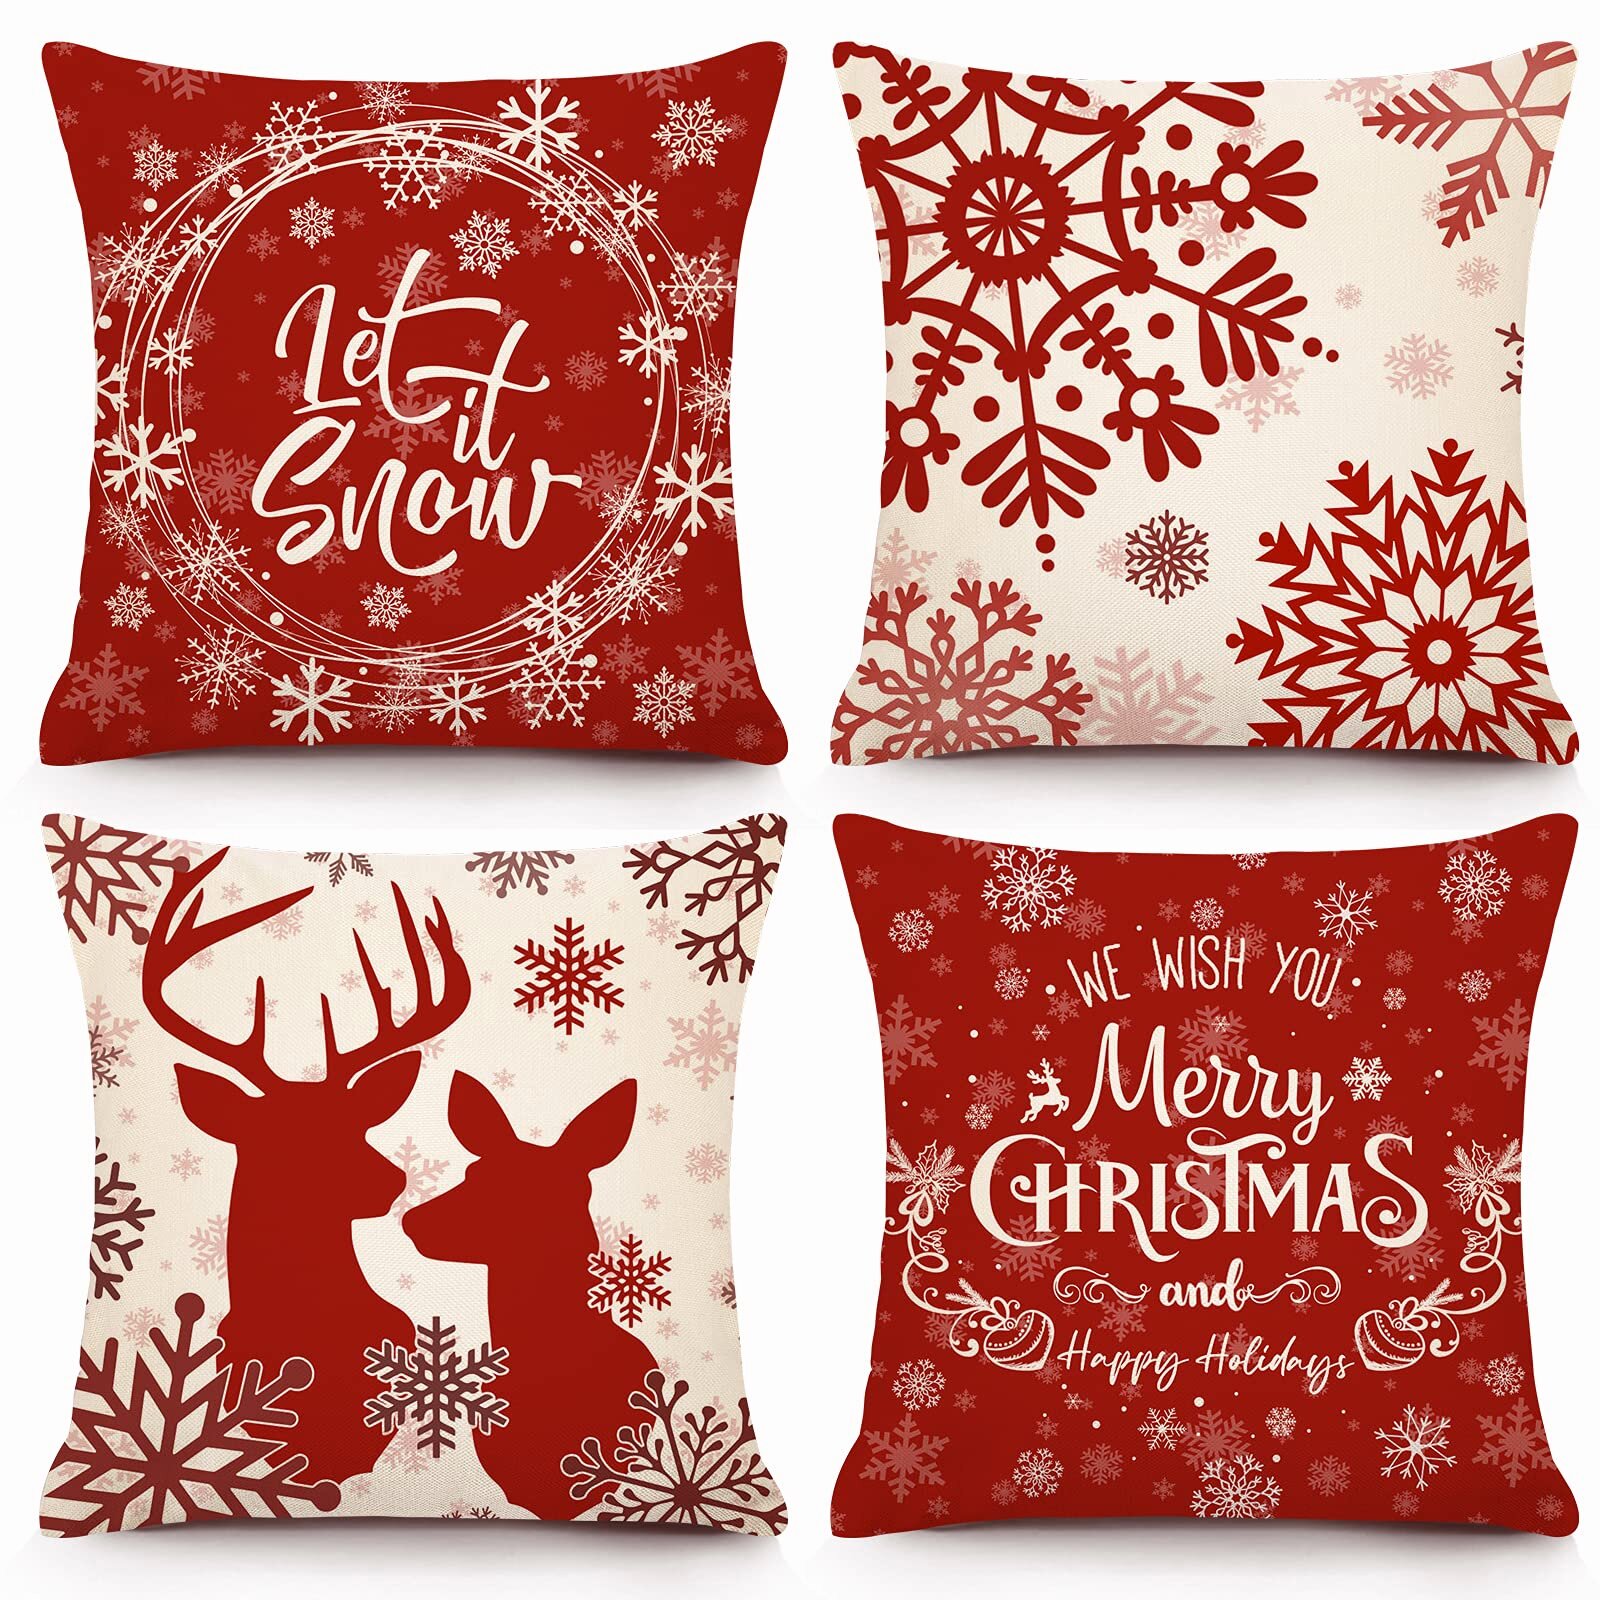 Christmas Pillows Covers Christmas Decorative Pillows Christmas Pillow Covers 18x18 inch Christmas Pillows Christmas Throw Pillow Covers Set of 4 Cotton Linen 